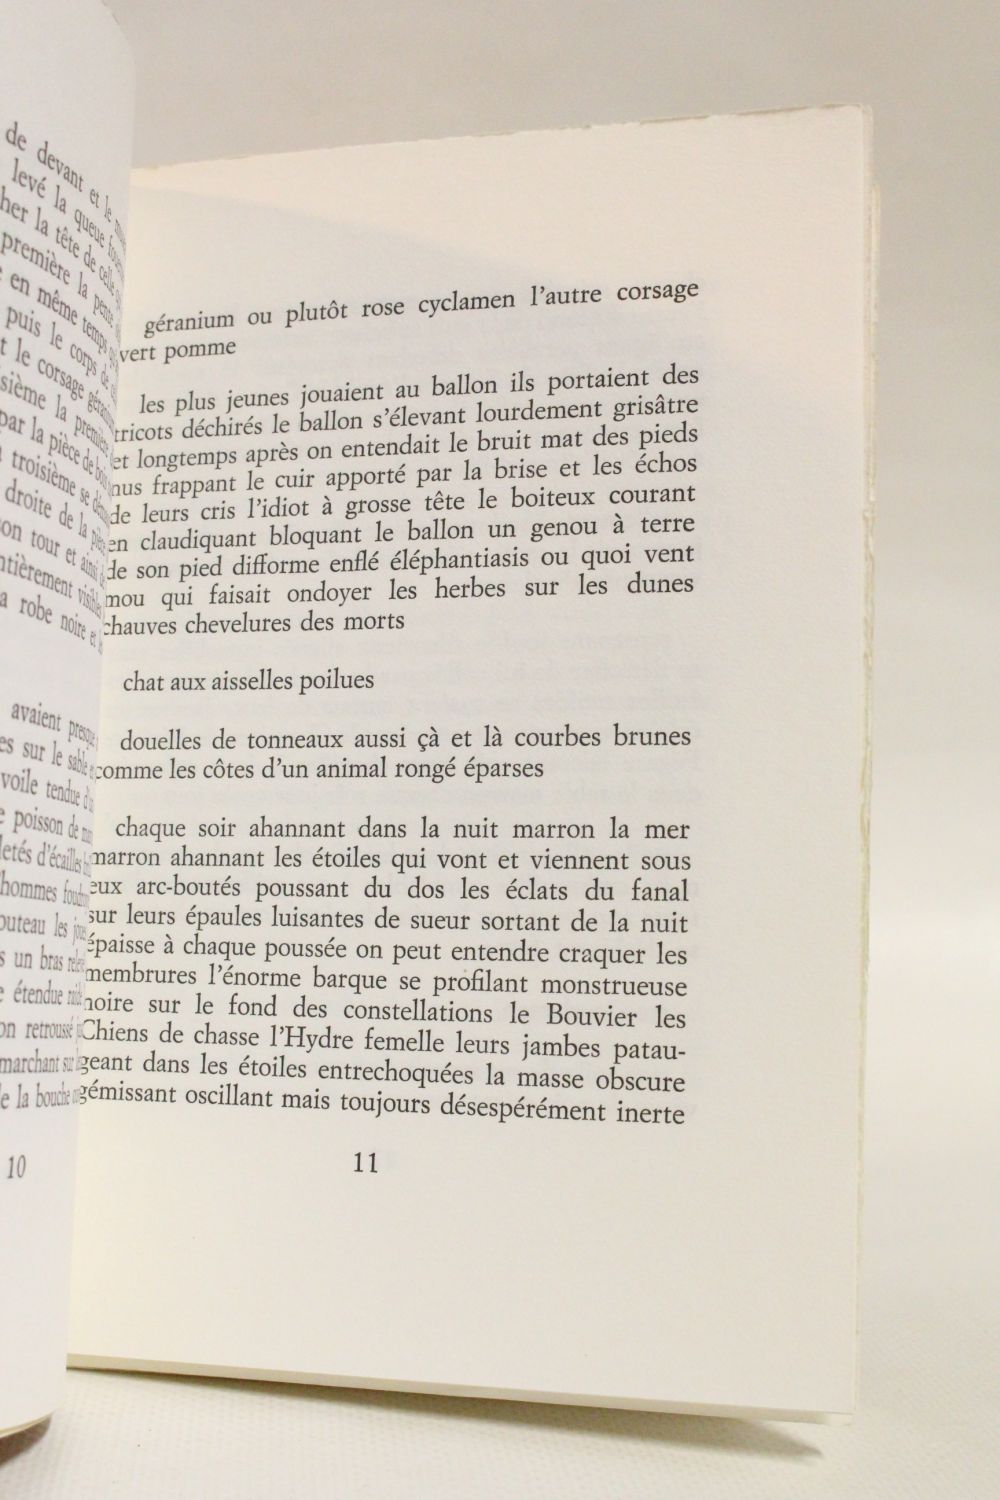 SIMON : La chevelure de Bérénice - Signed book - Edition-Originale.com